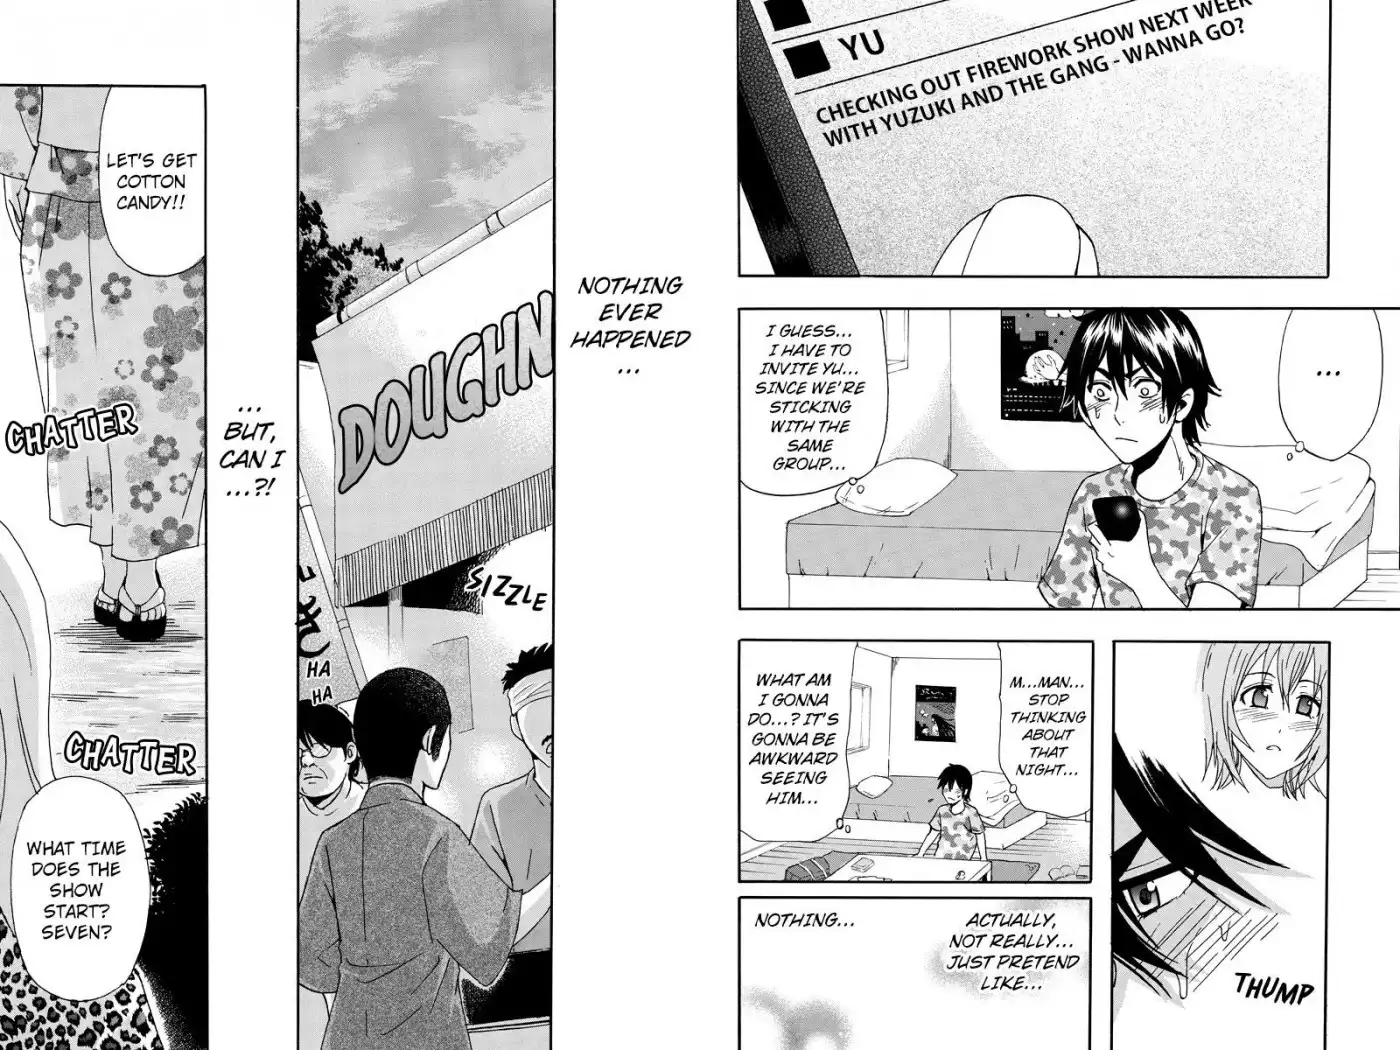 Kazuki Makes Love Happen?! at ALL-BOYS High School Chapter 33